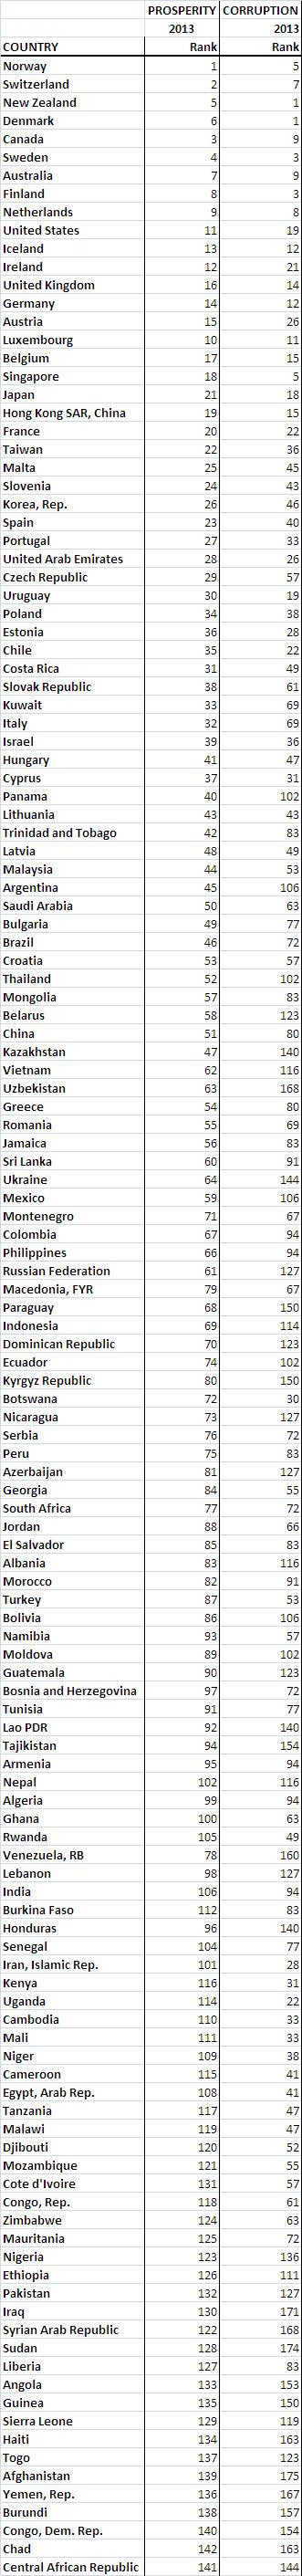 tabla comparativa paises